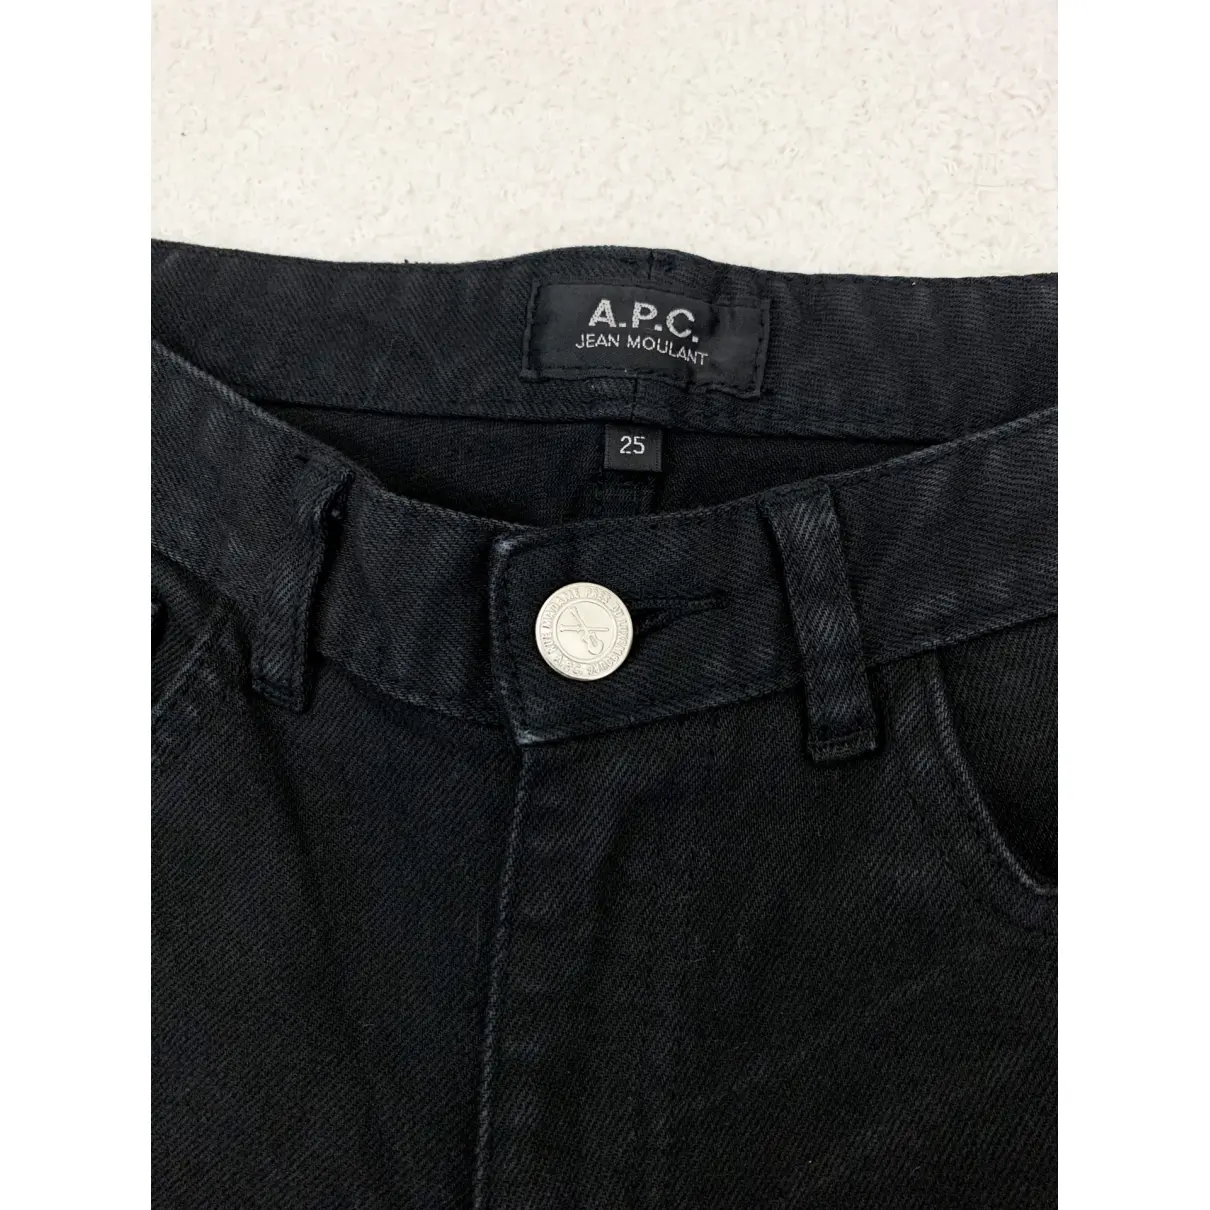 Slim jeans APC